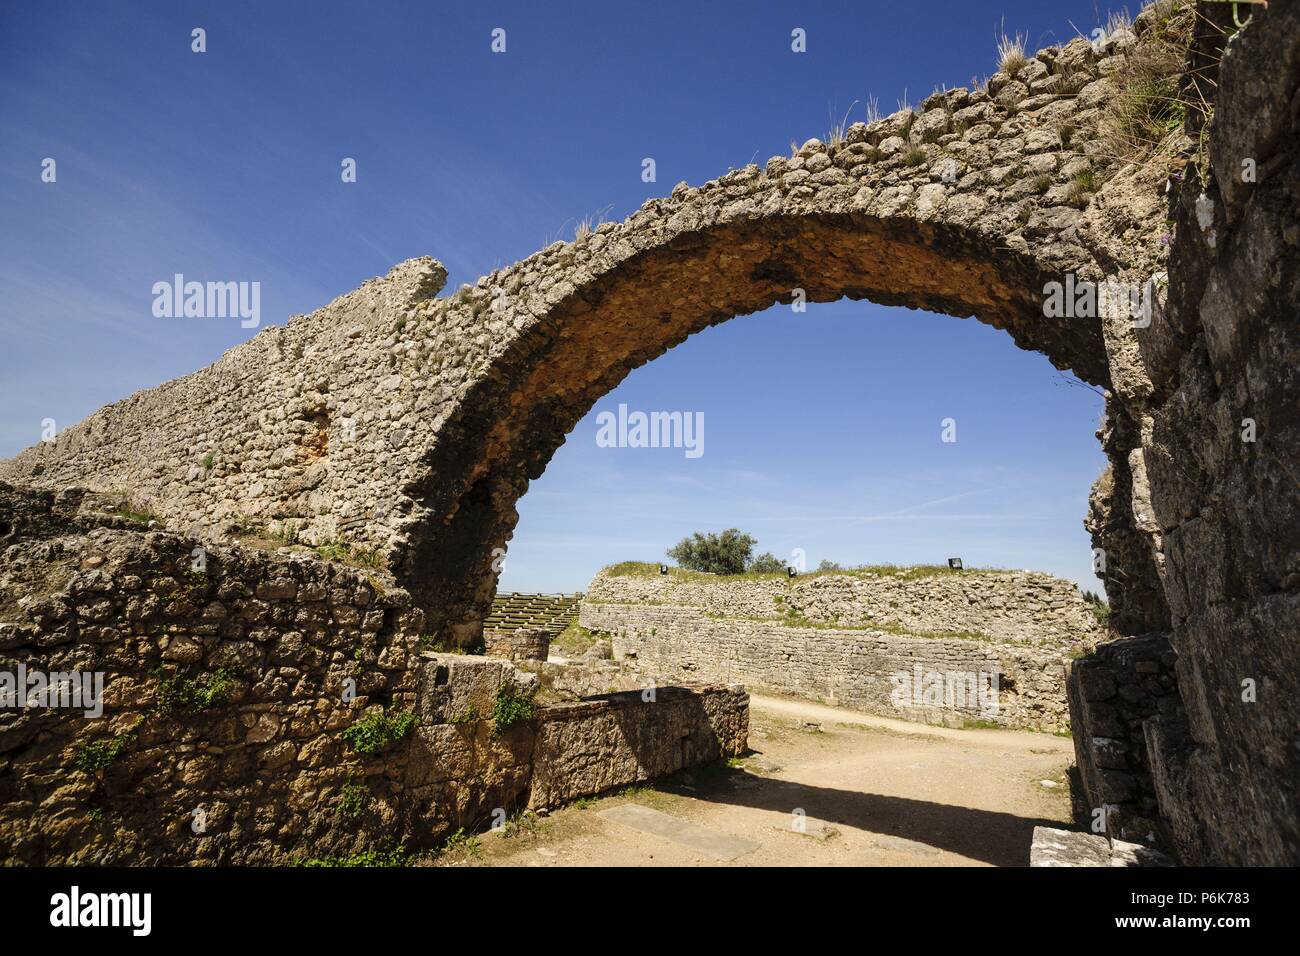 Acueducto,Conimbriga, Ciudad del Conventus Scallabitanus, provincia romana de Lusitania, cerca de Condeixa-a-Nova, Distrito de Coimbra, Portogallo, Europa. Foto Stock